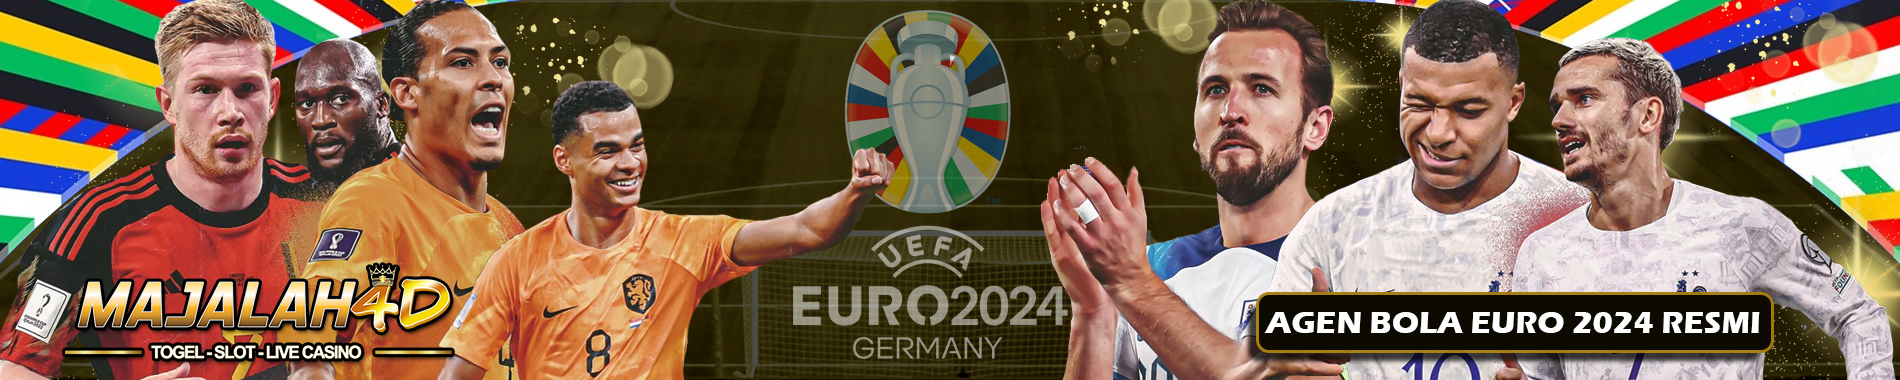 Majalah4D Agen Bola Euro 2024